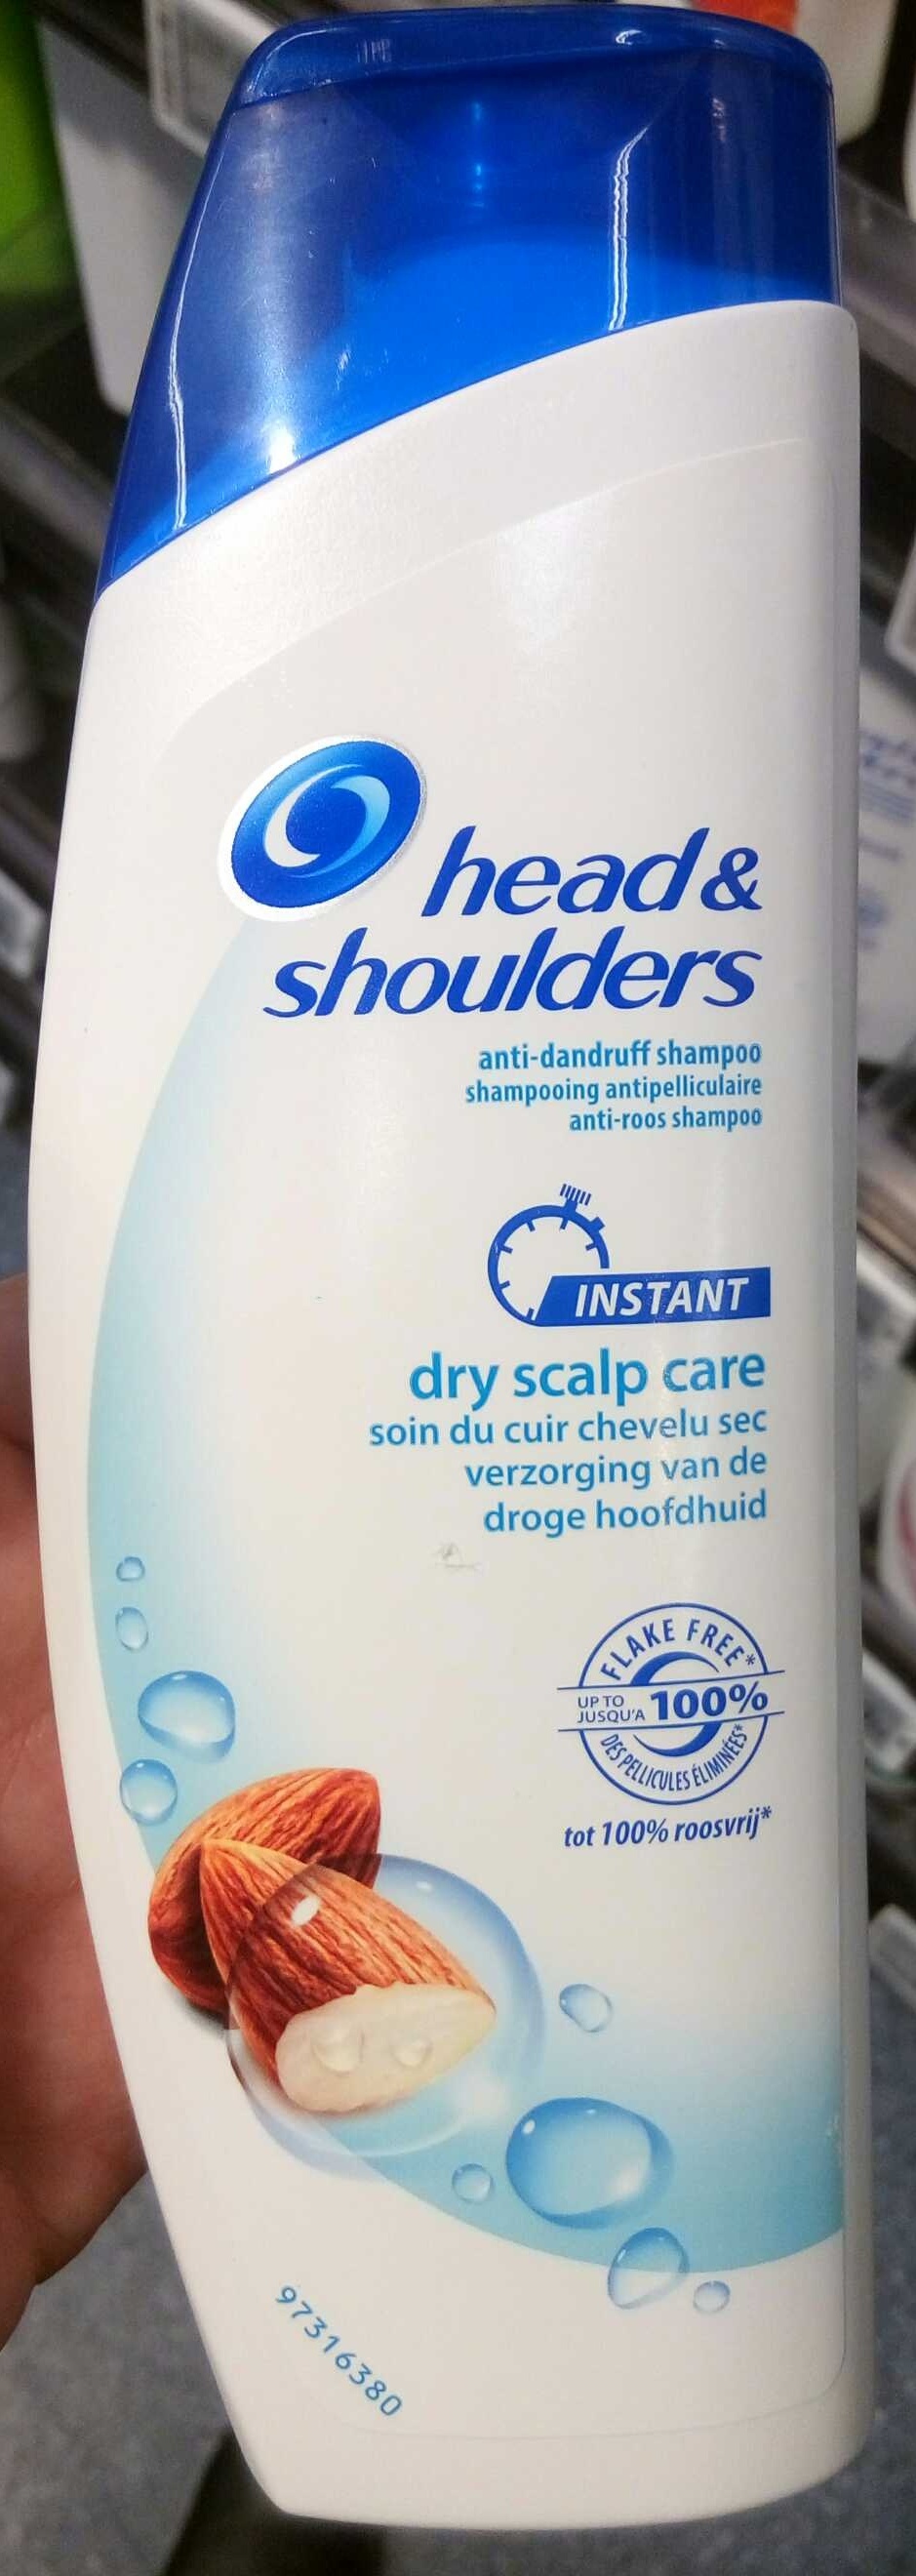 Shampooing antipelliculaire Instant Dry Scalp Care - Produto - fr